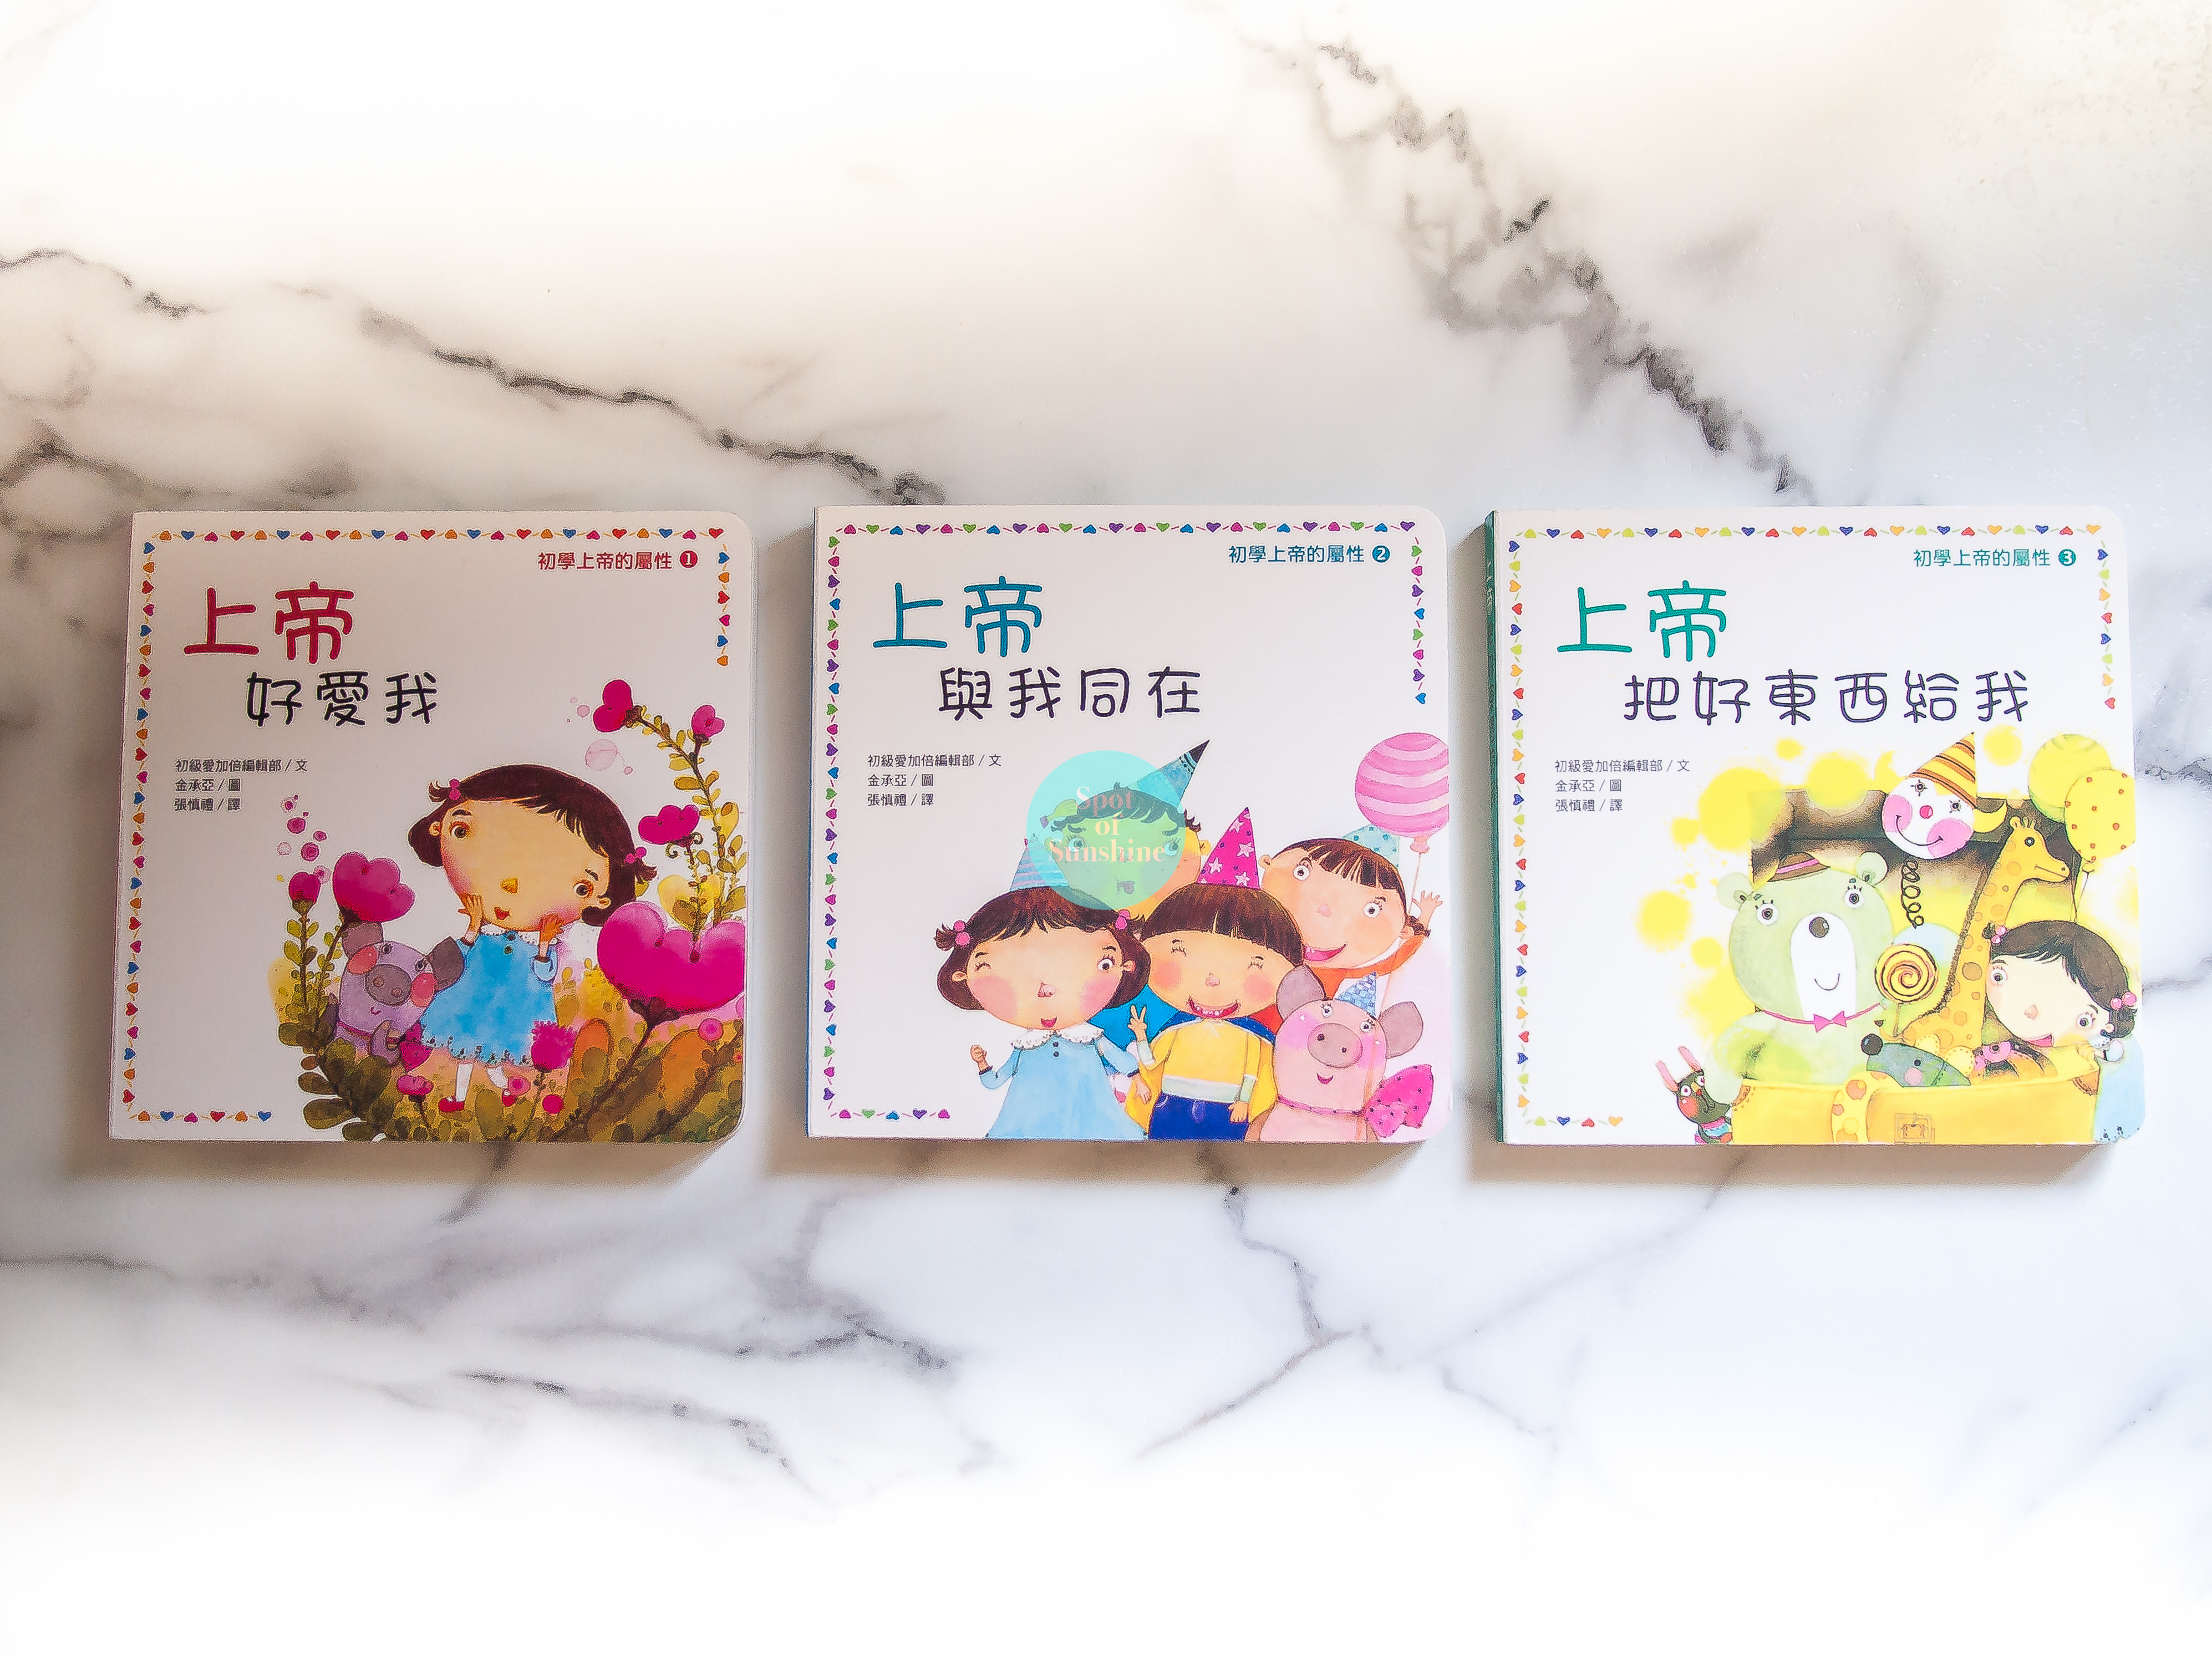 character of God toddlers preschooler chinese children's devotionals Jesus christianity family devotions mandarin